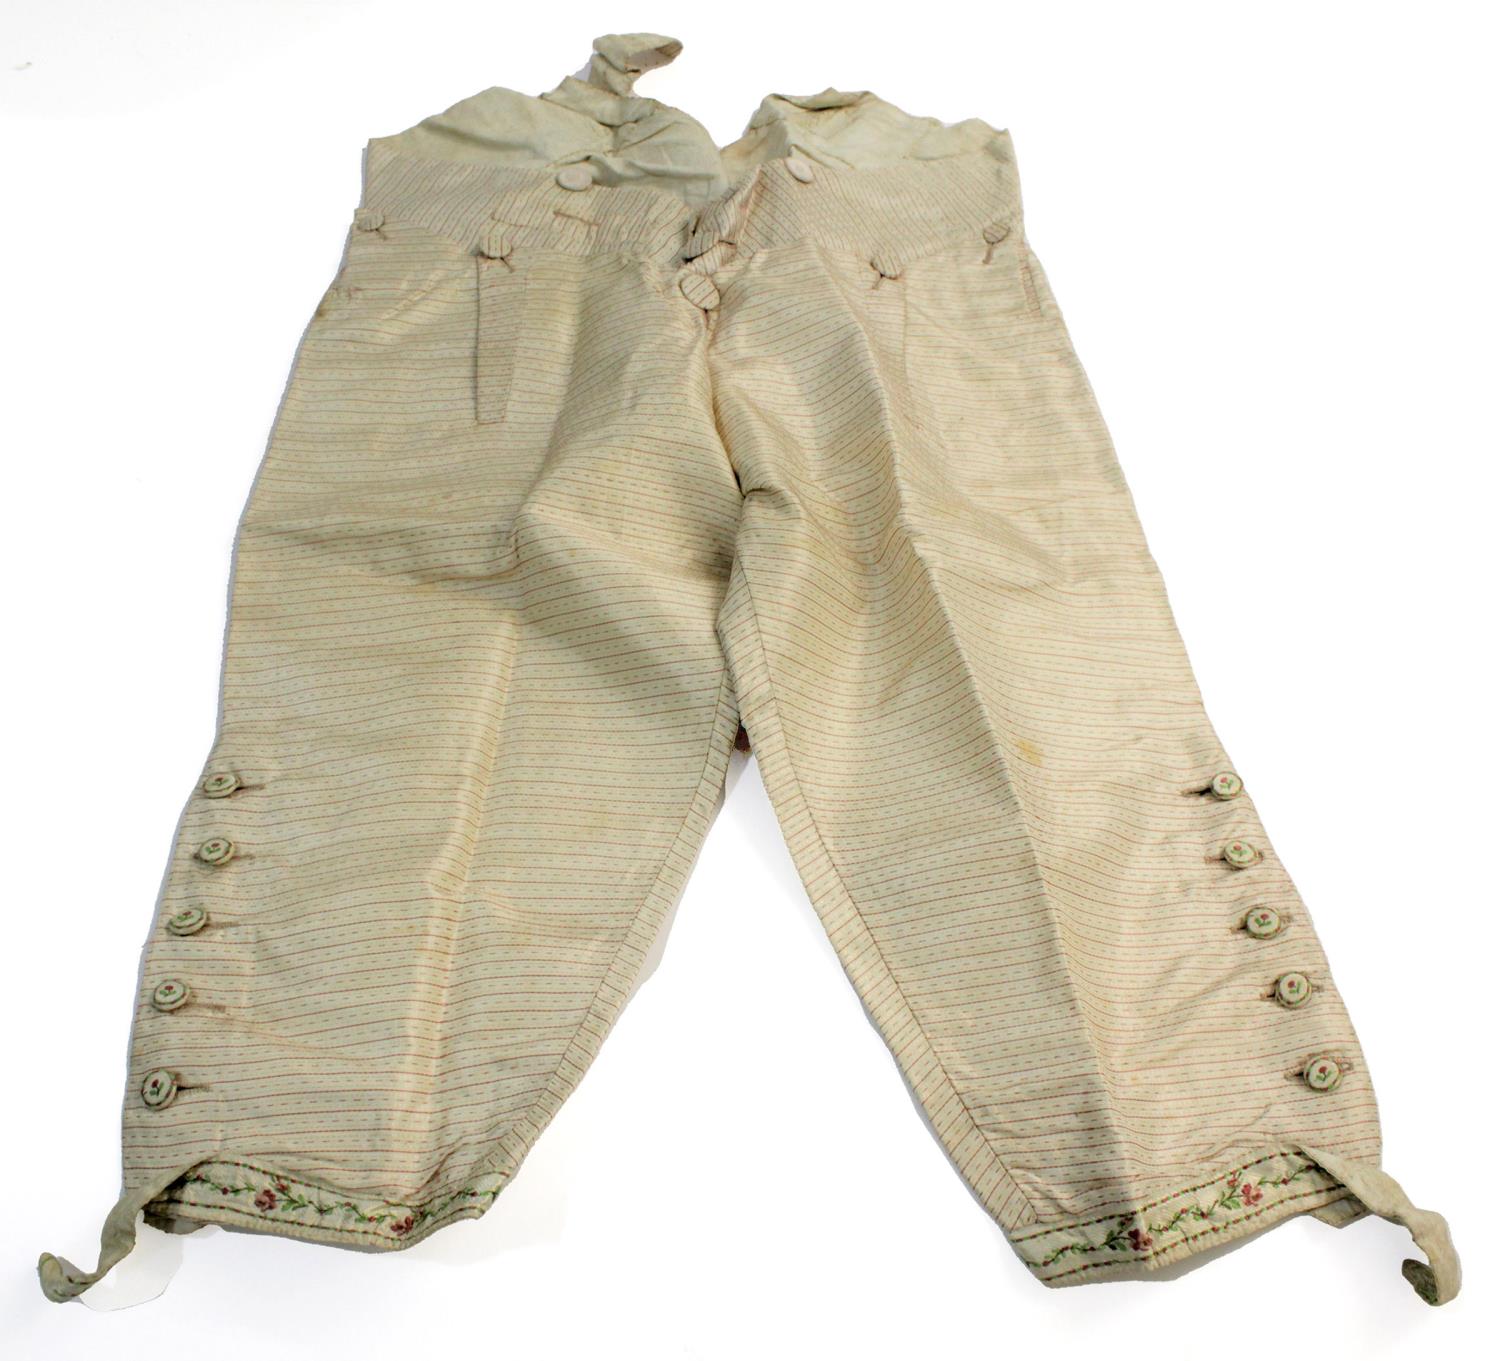 EARLY 19THC SILK COURT BREECHES circa 1825, a pair of silk breeches worn by Sir Robert Burton of